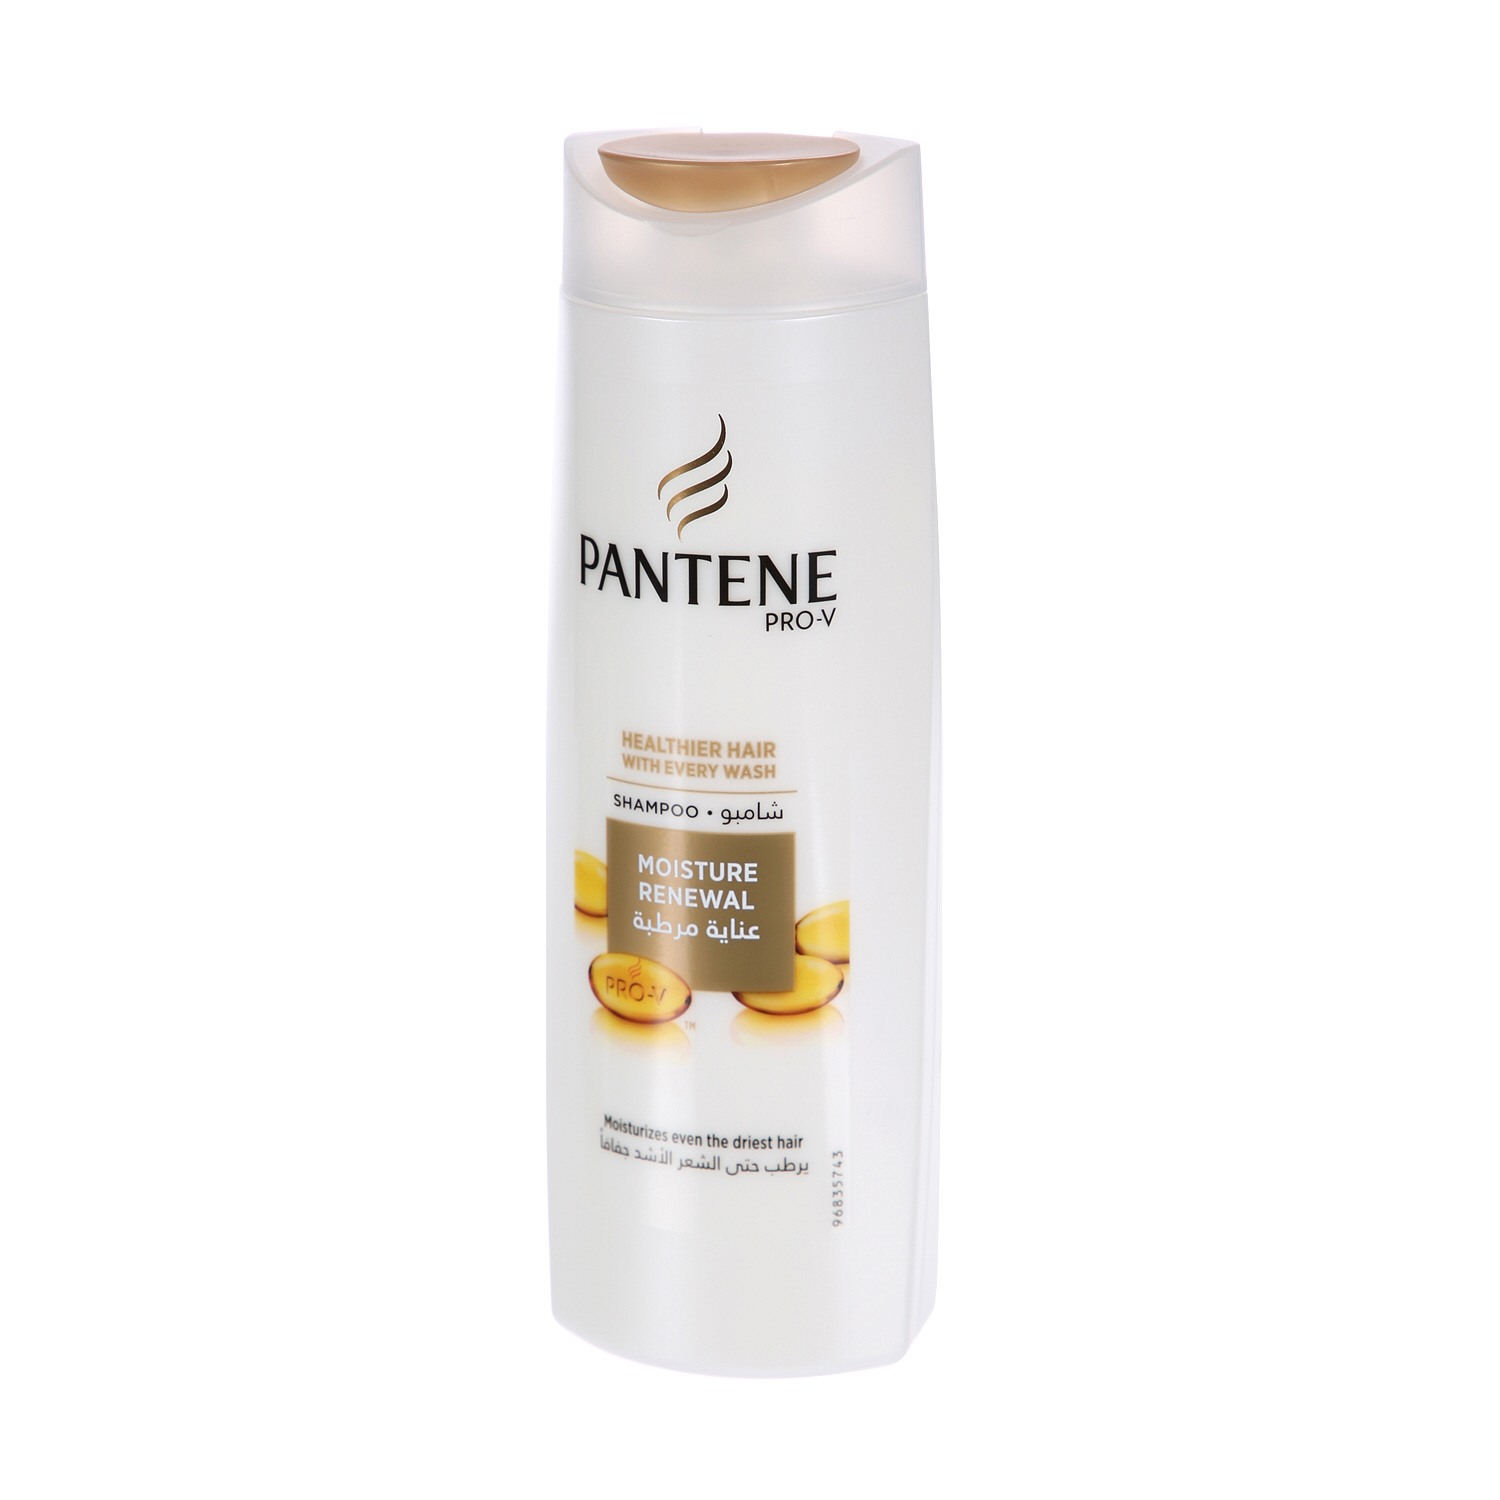 Pantene Shampoo Moisture Renewal 400ml